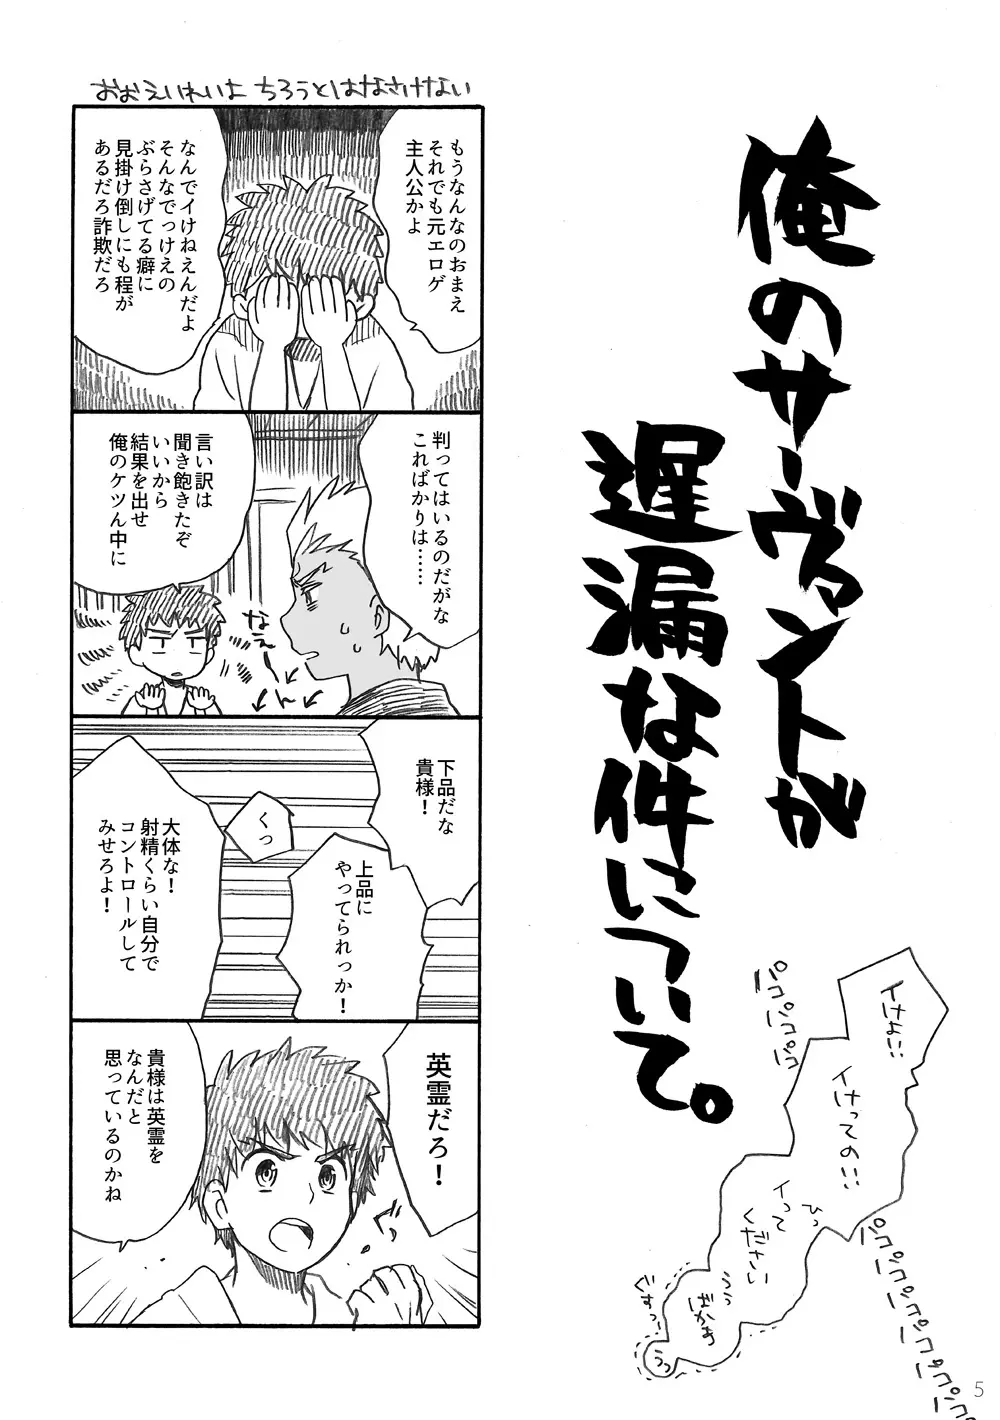 弓士本 - page67